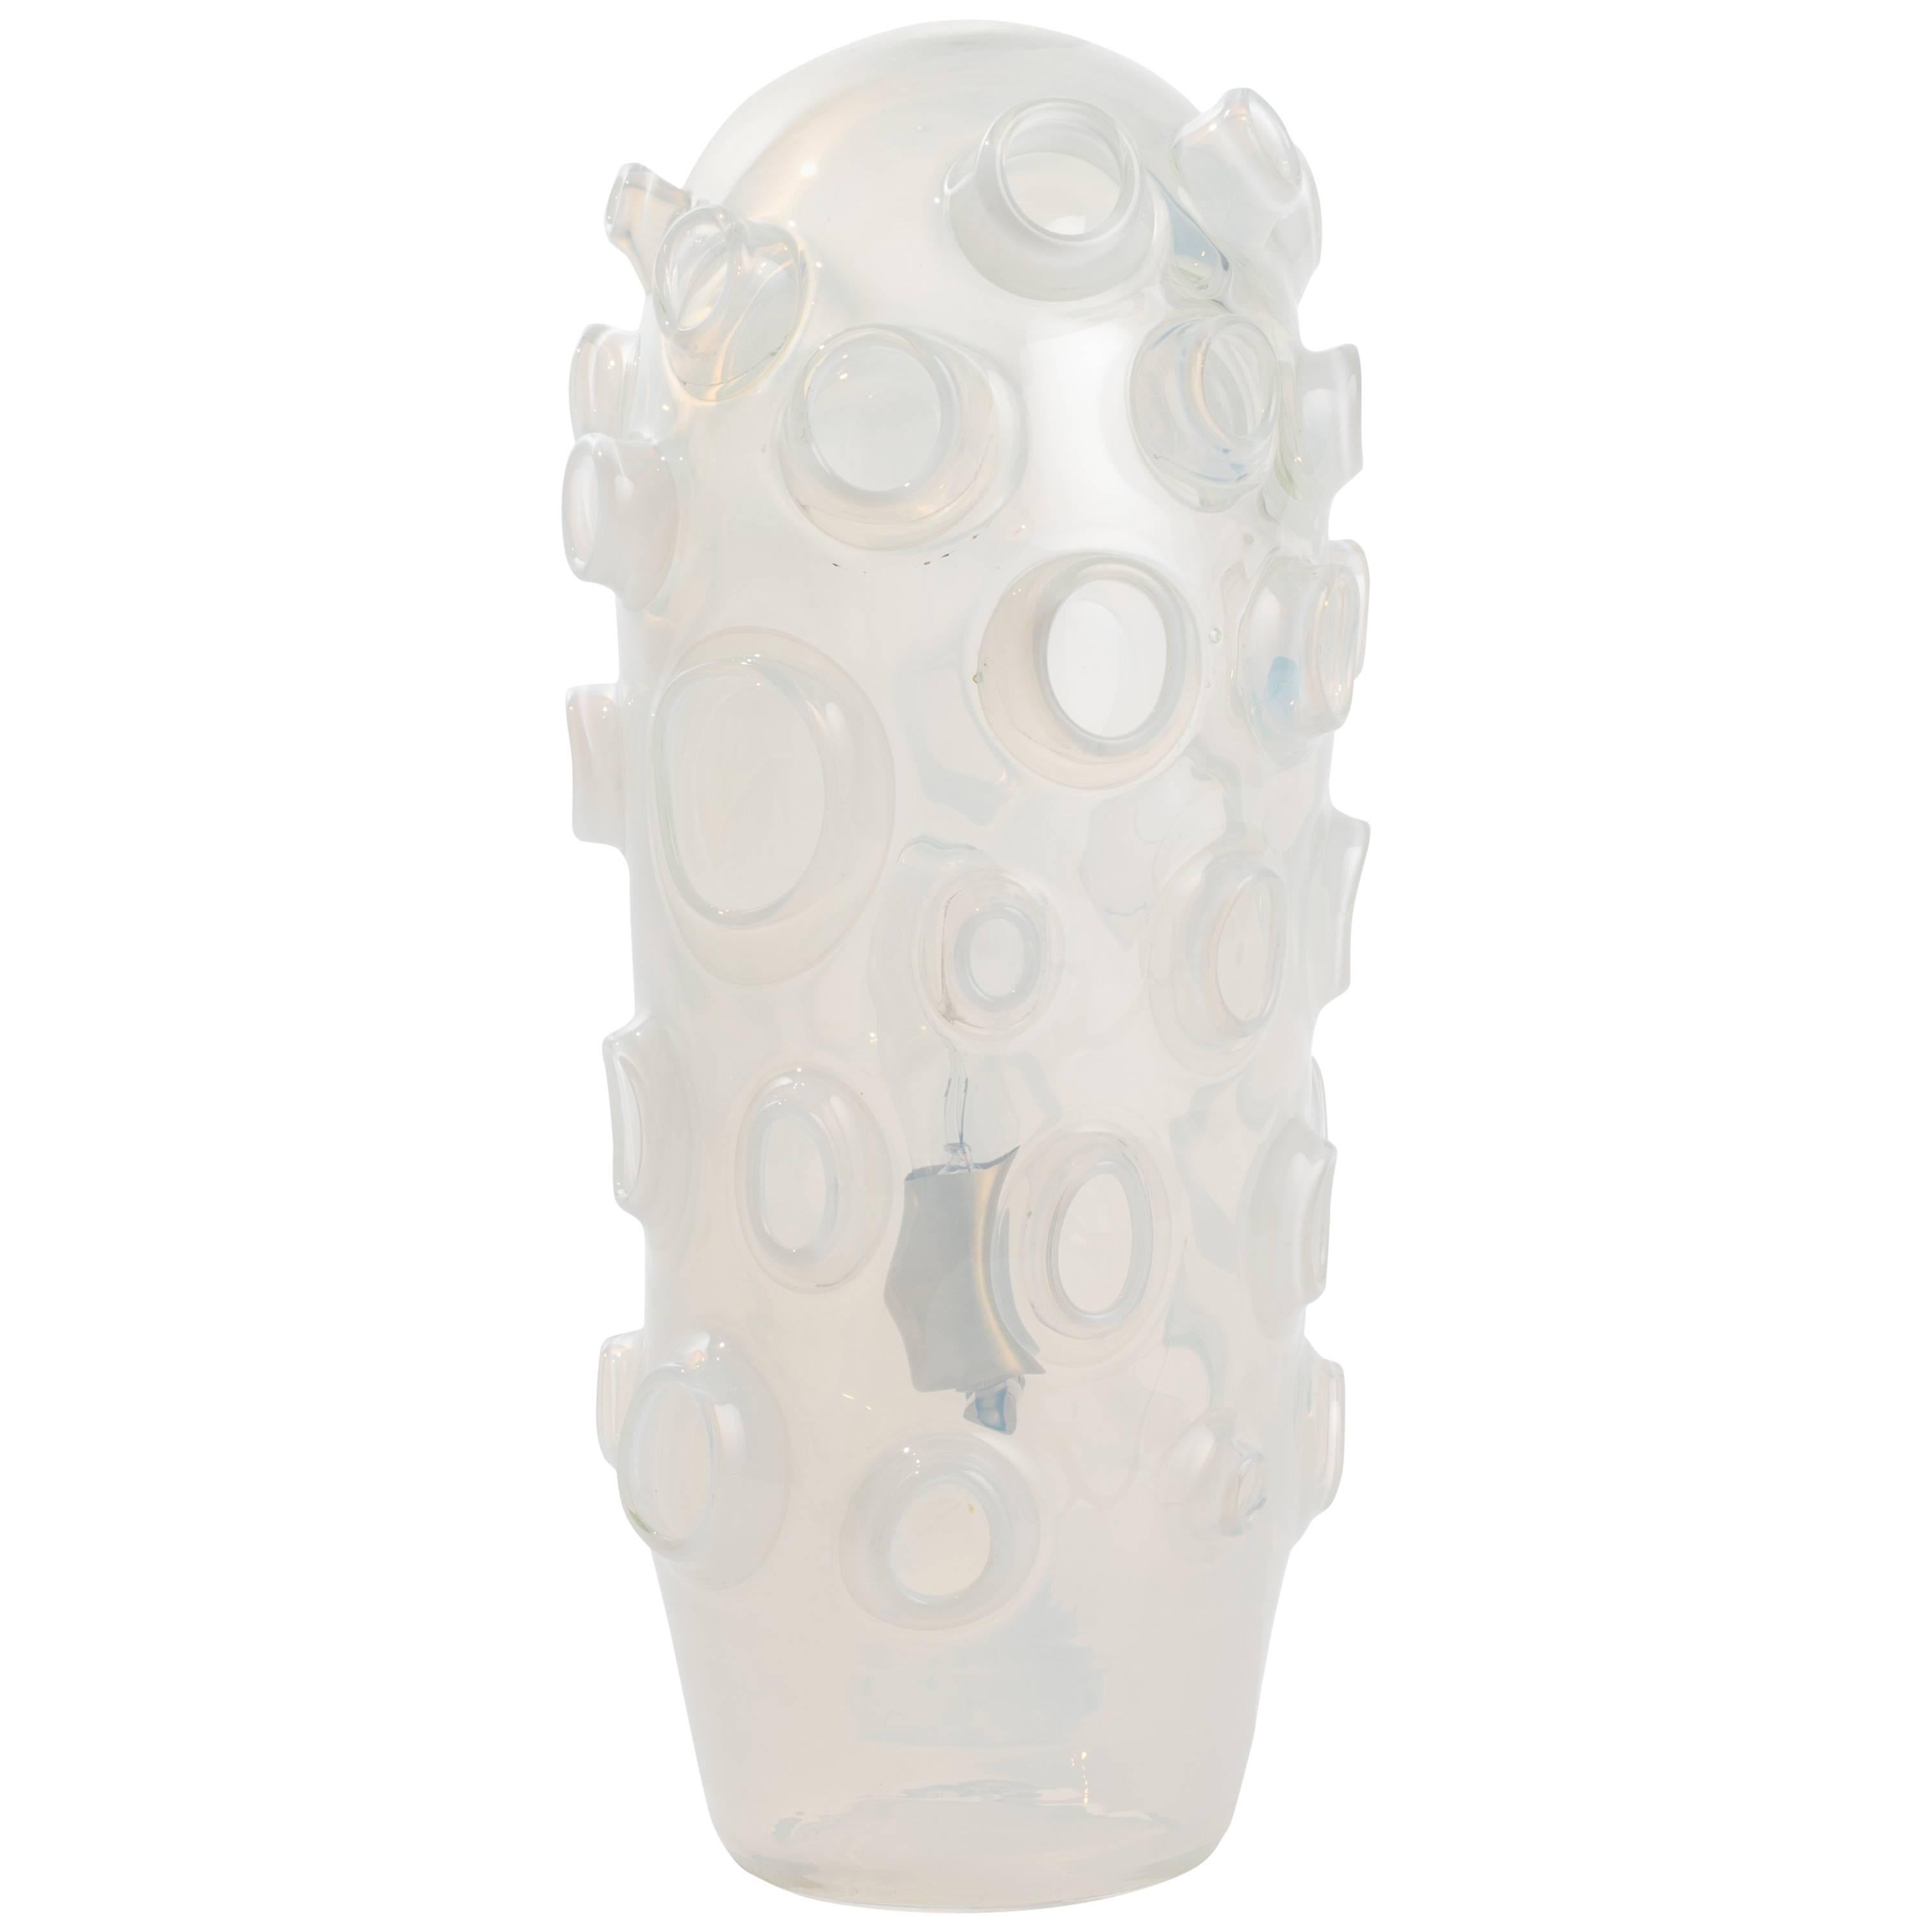 Limited Edition Handblown Opaline Art Glass Lamp, "Caldera" For Sale